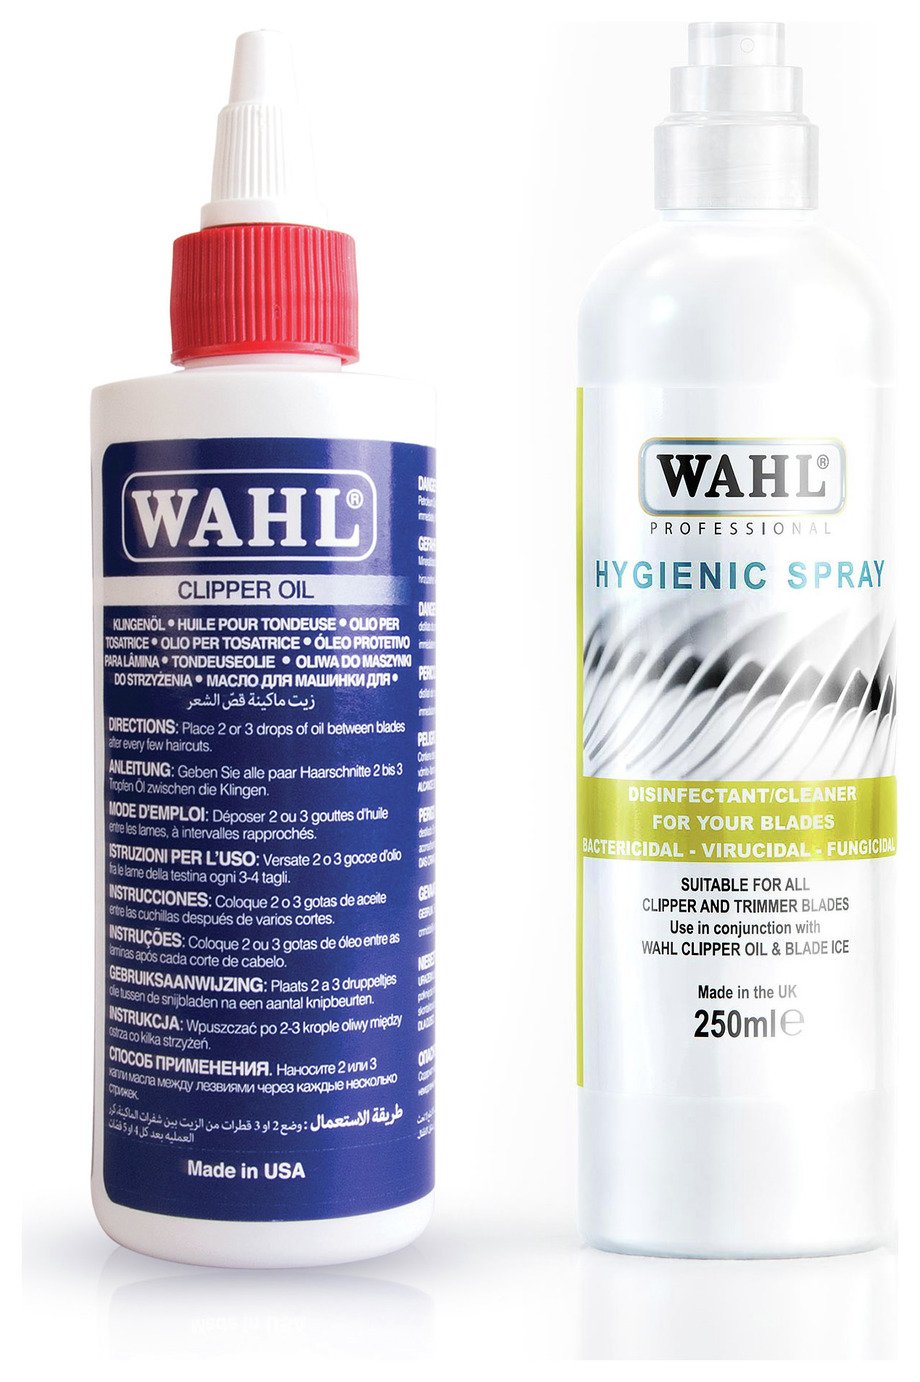 spray oil for hair clippers